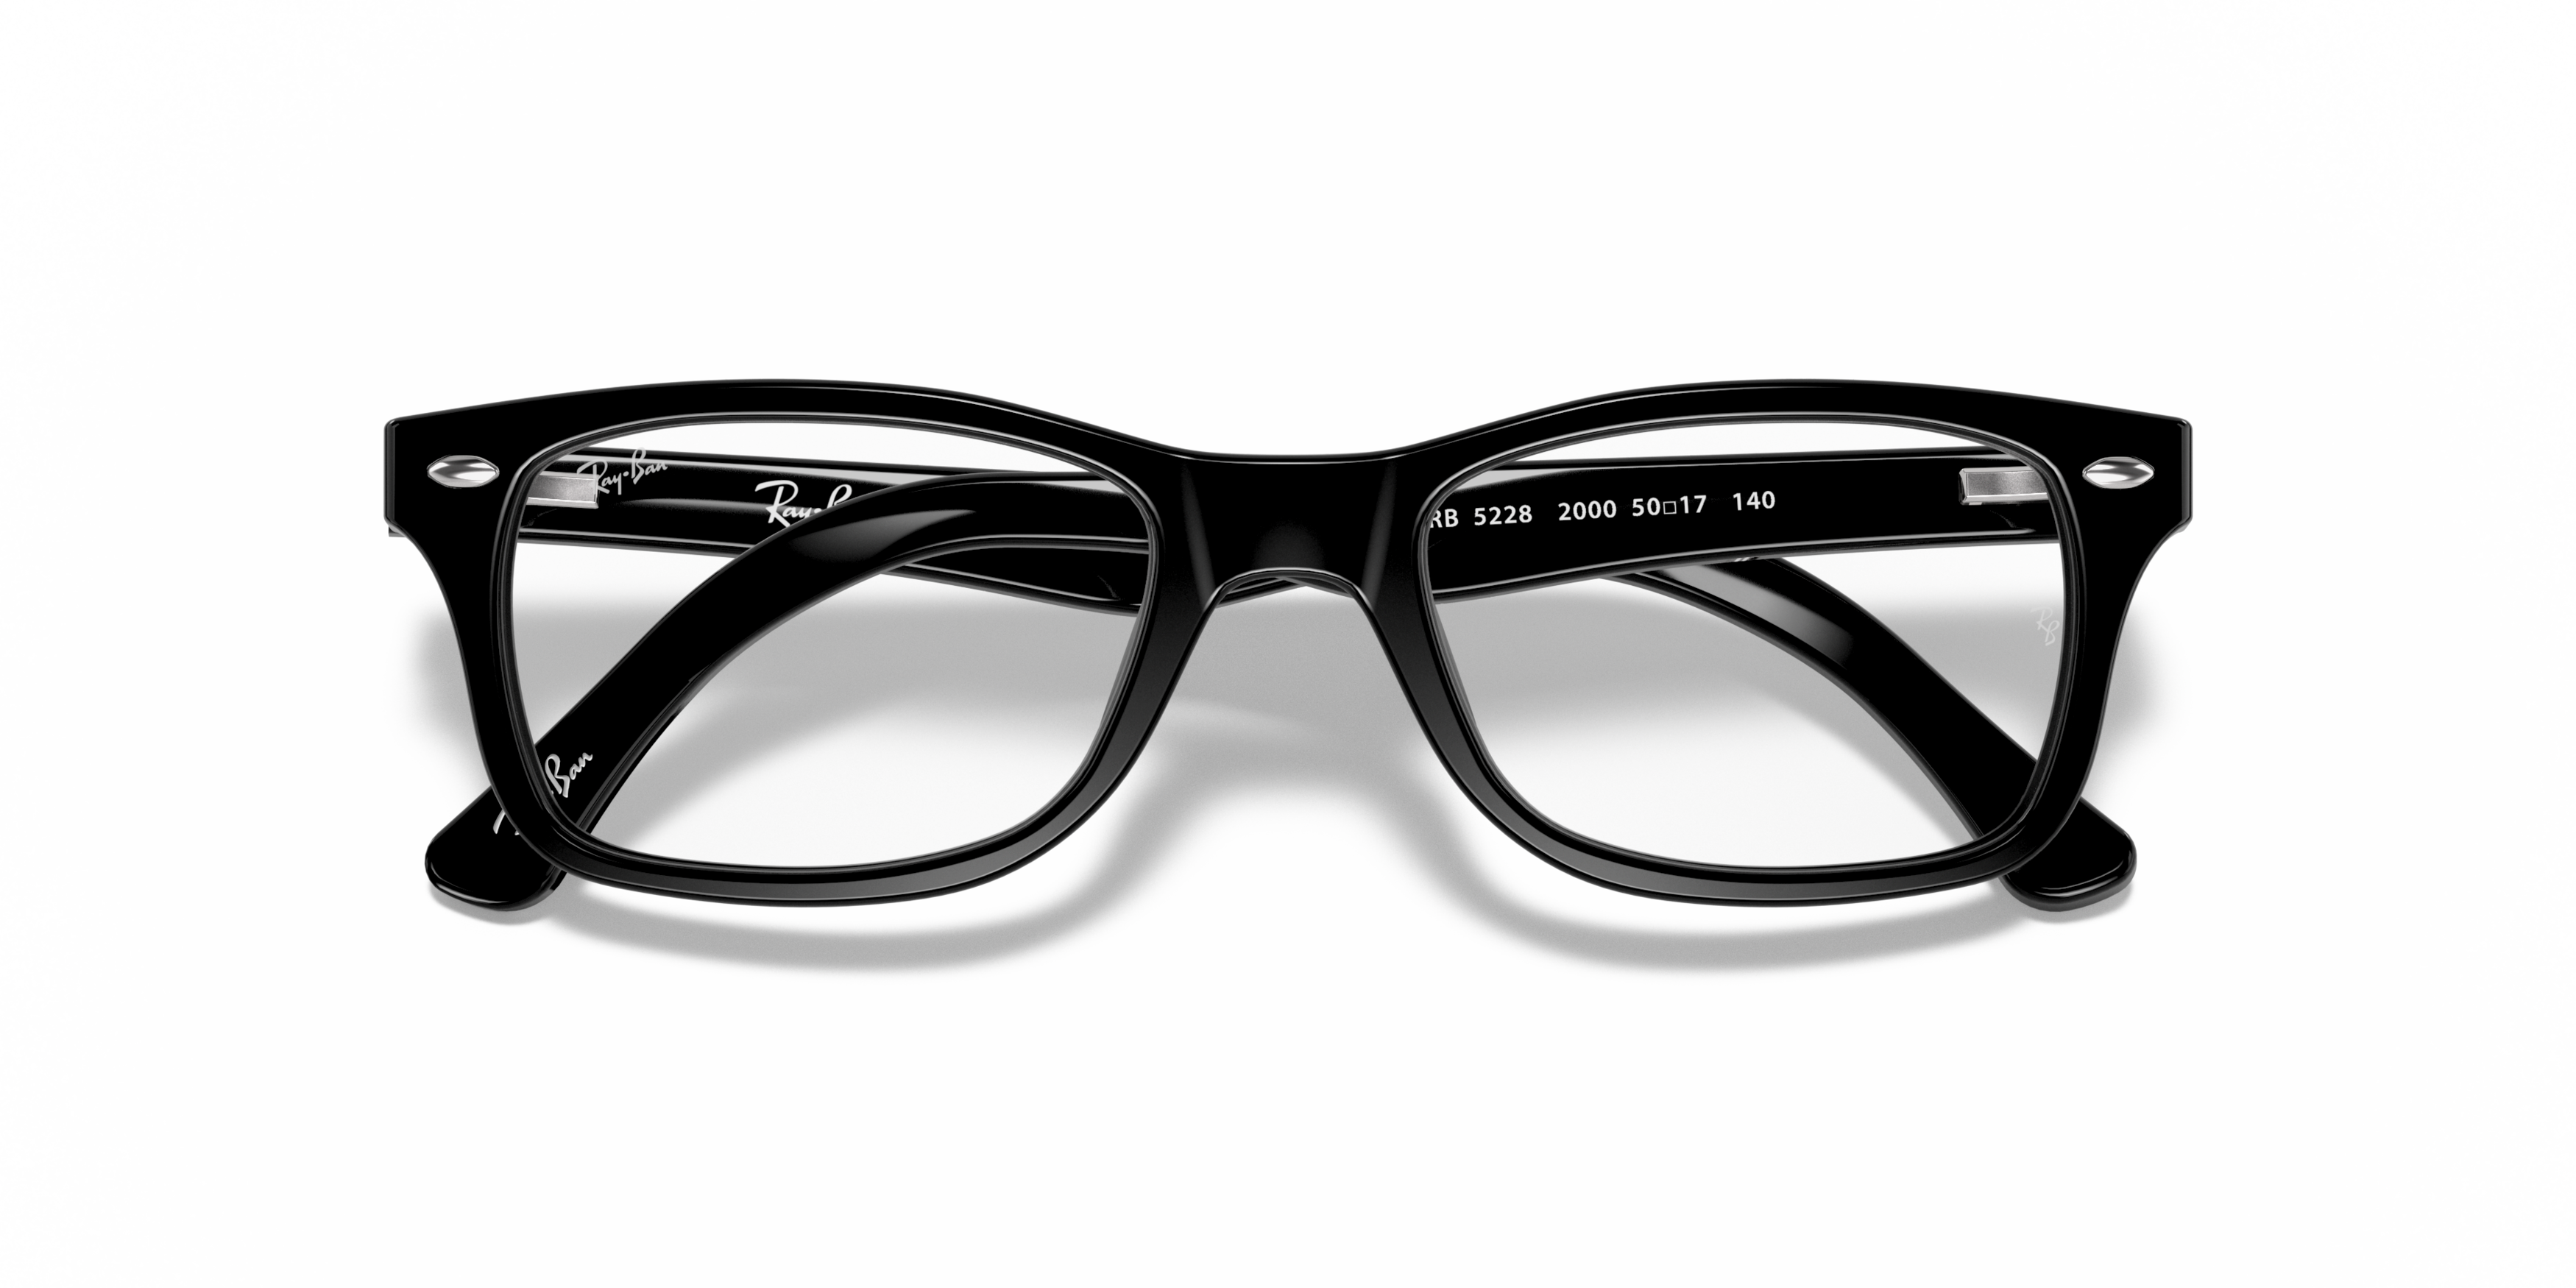 Folded Ray-Ban RX 5228 (2012) Glasses Transparent / Tortoise Shell